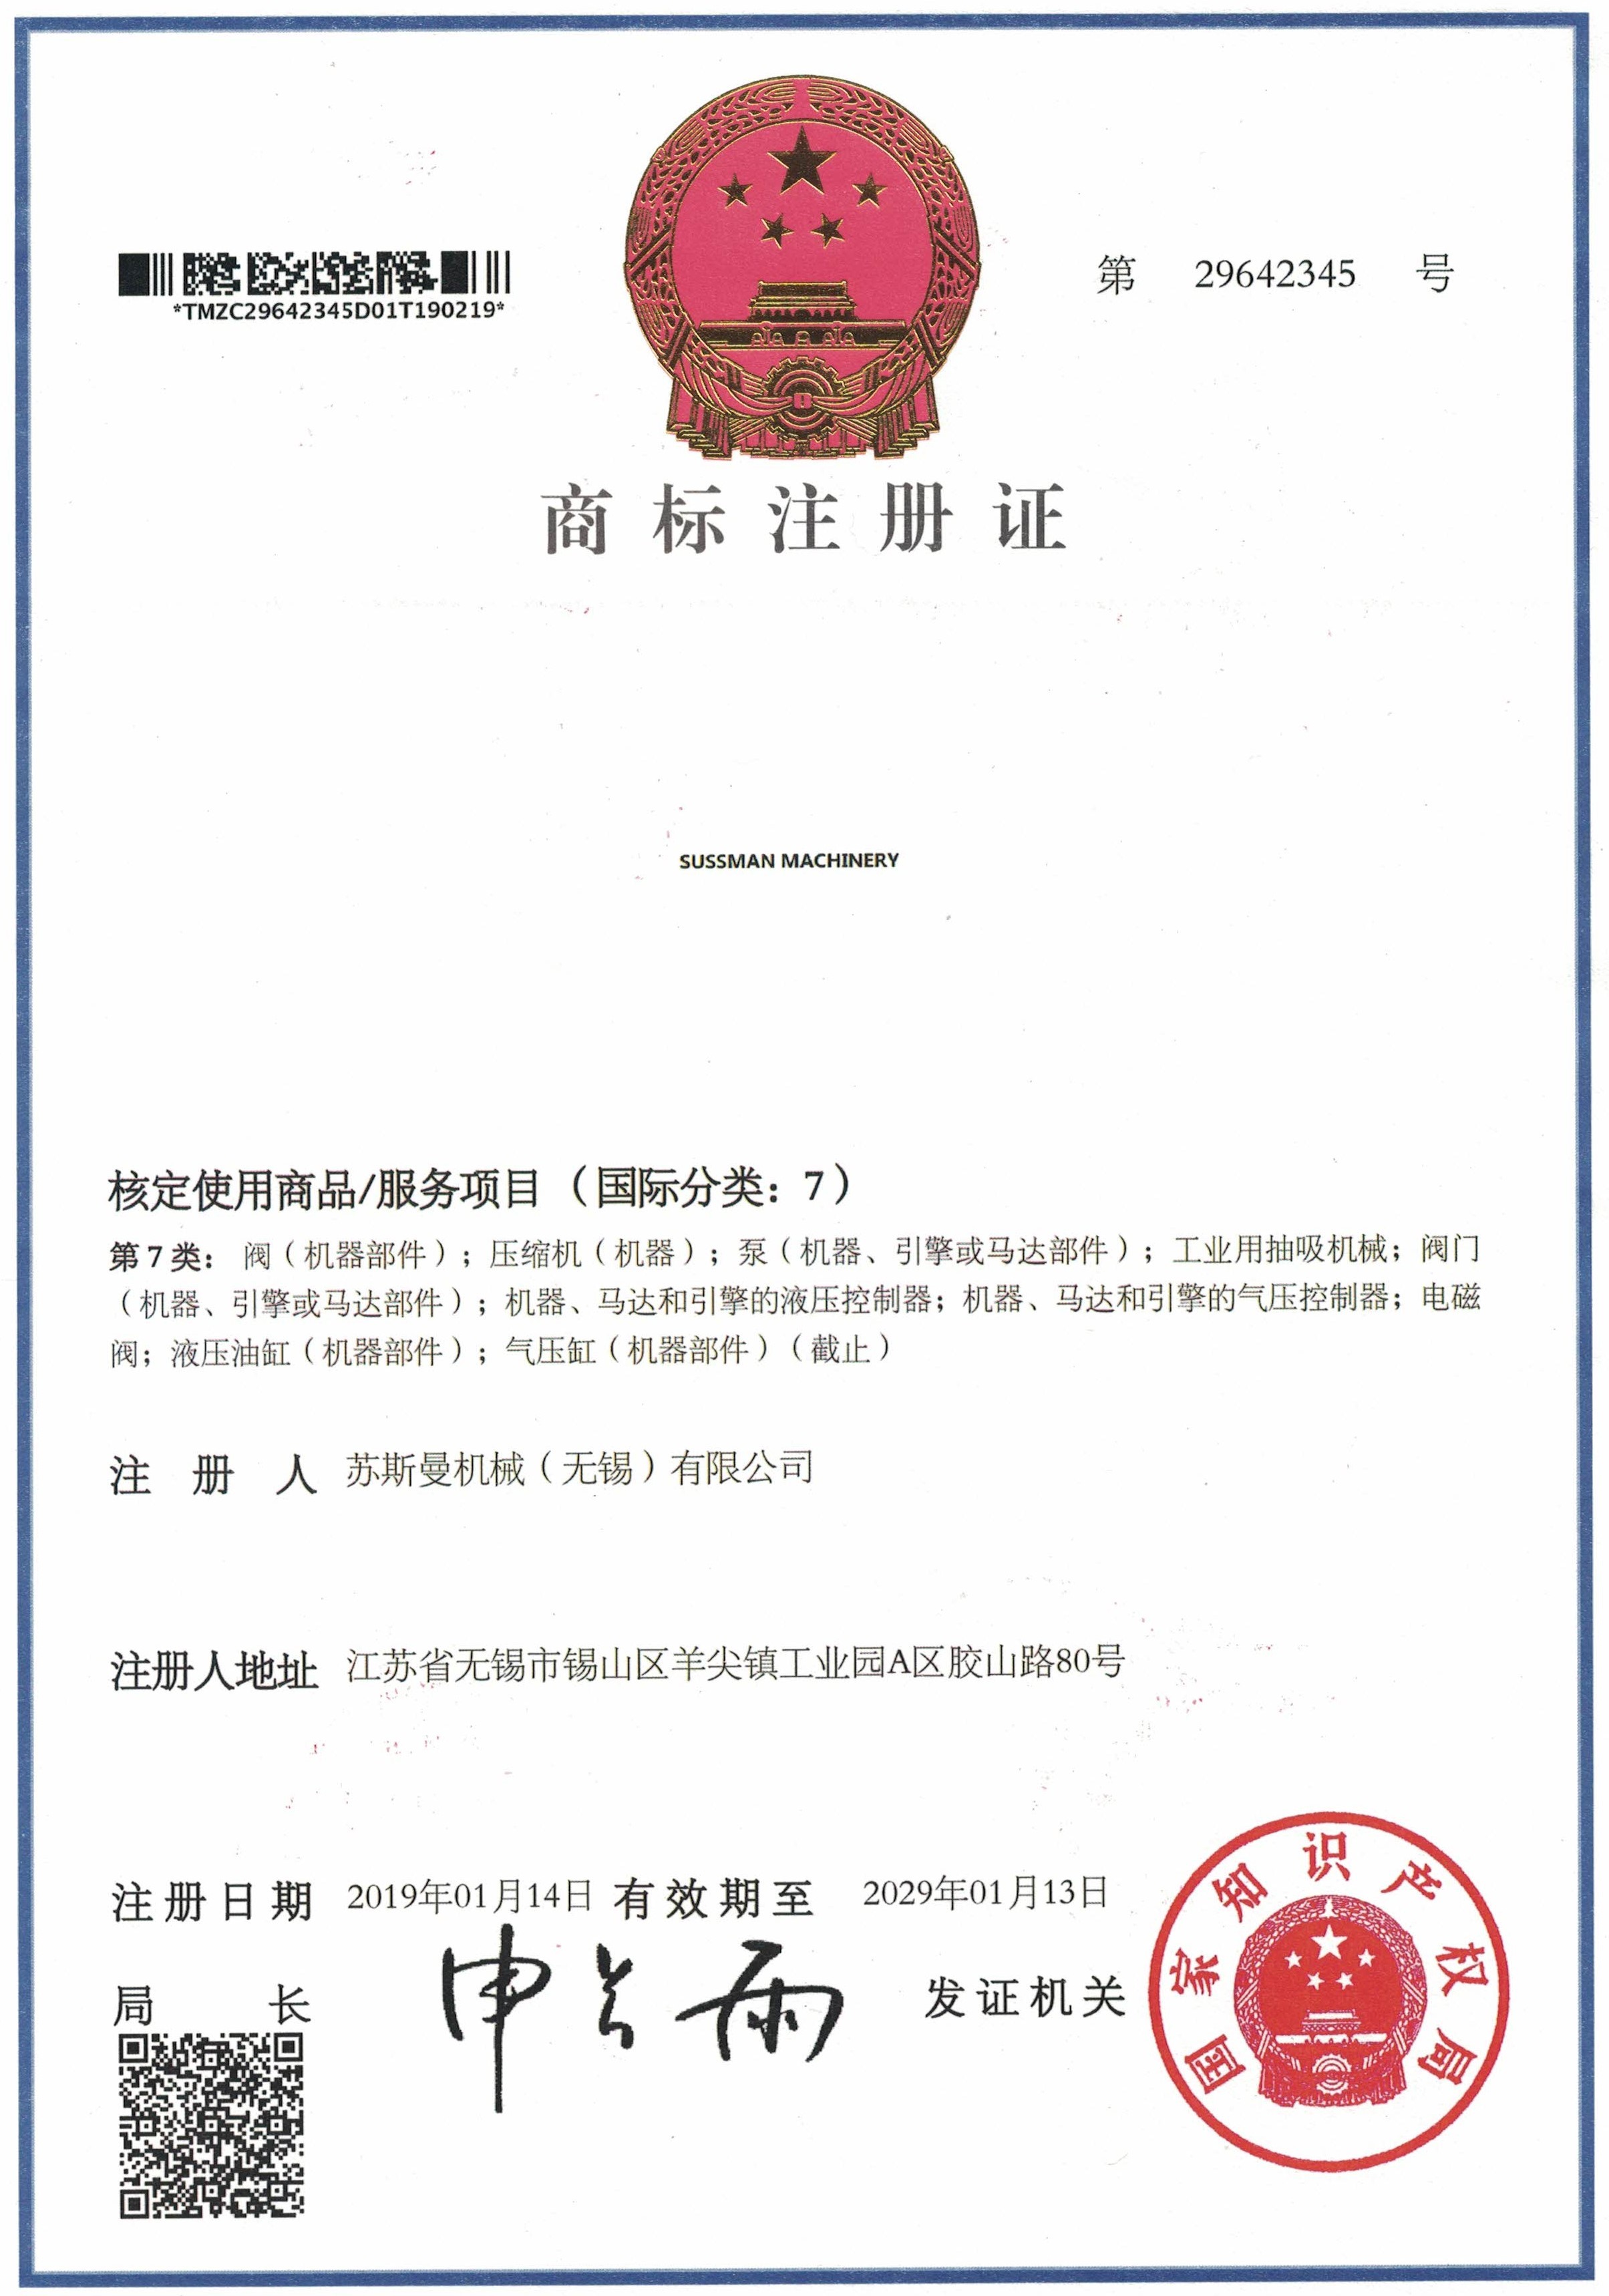 Sussman Modular House (Wuxi)Co.,Ltd Certifications